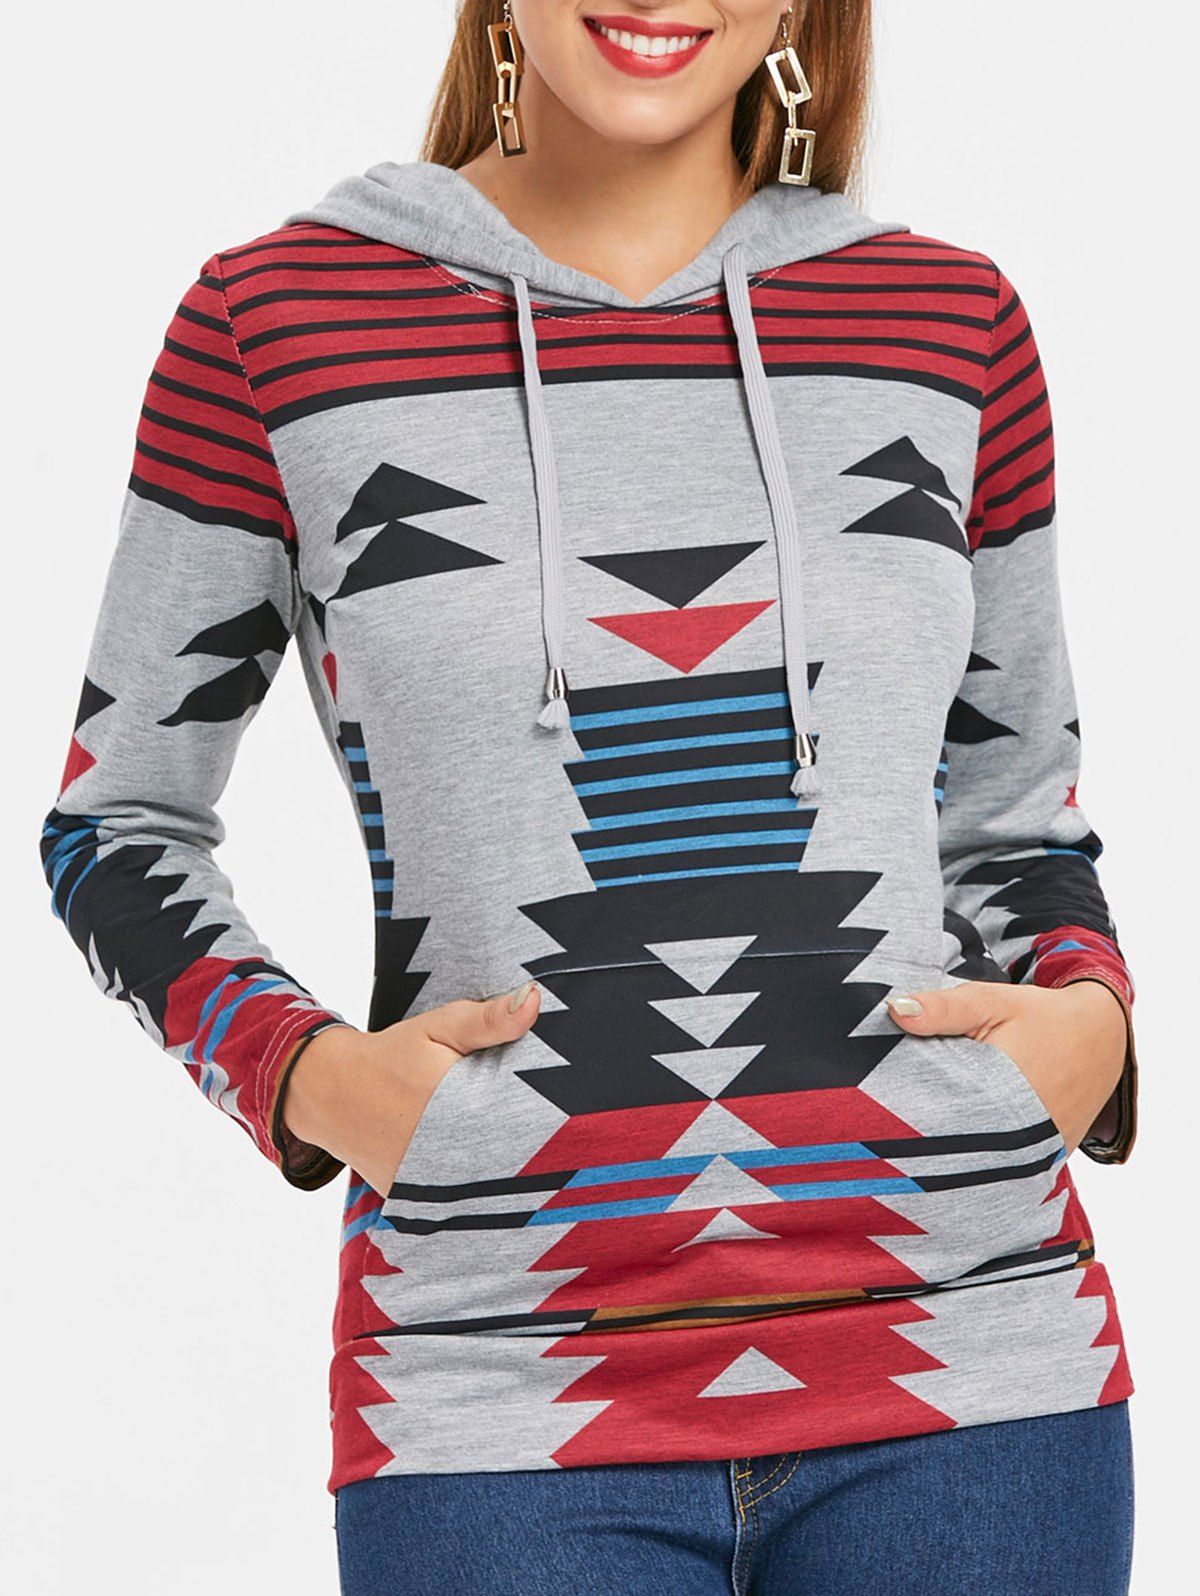 Casual Geometric Pattern Long Sleeves Women's Hoodie - GRAY L